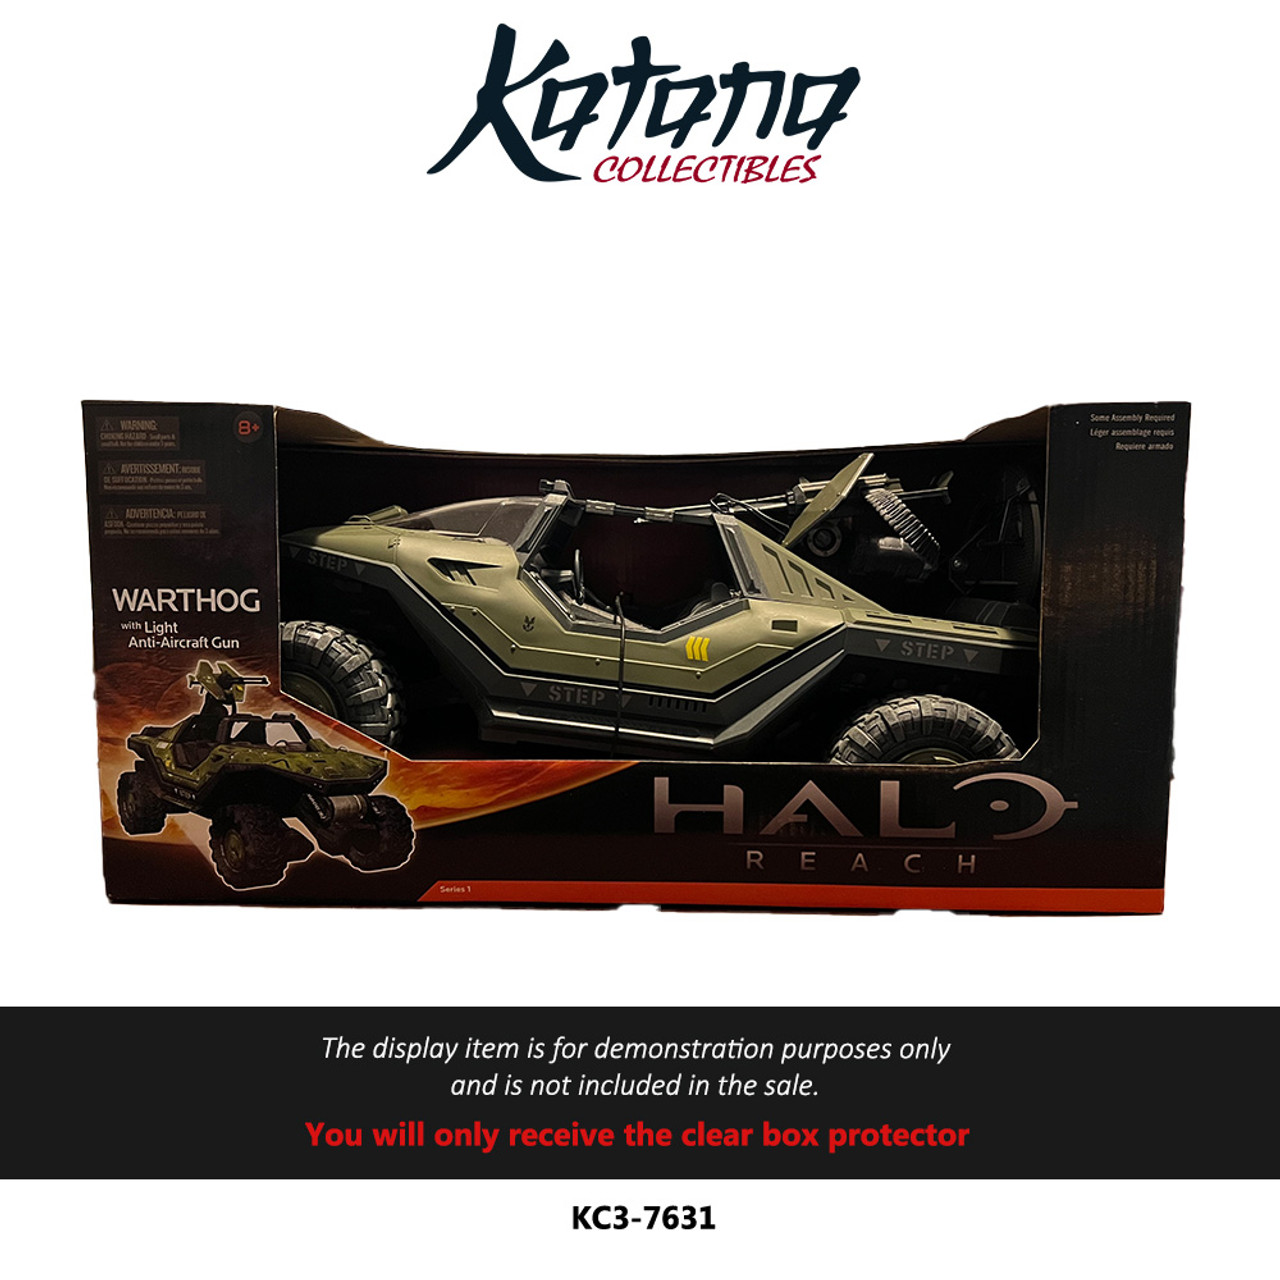 Katana Collectibles Protector For Halo Reach Warthog with Light Anti-Aircraft Gun